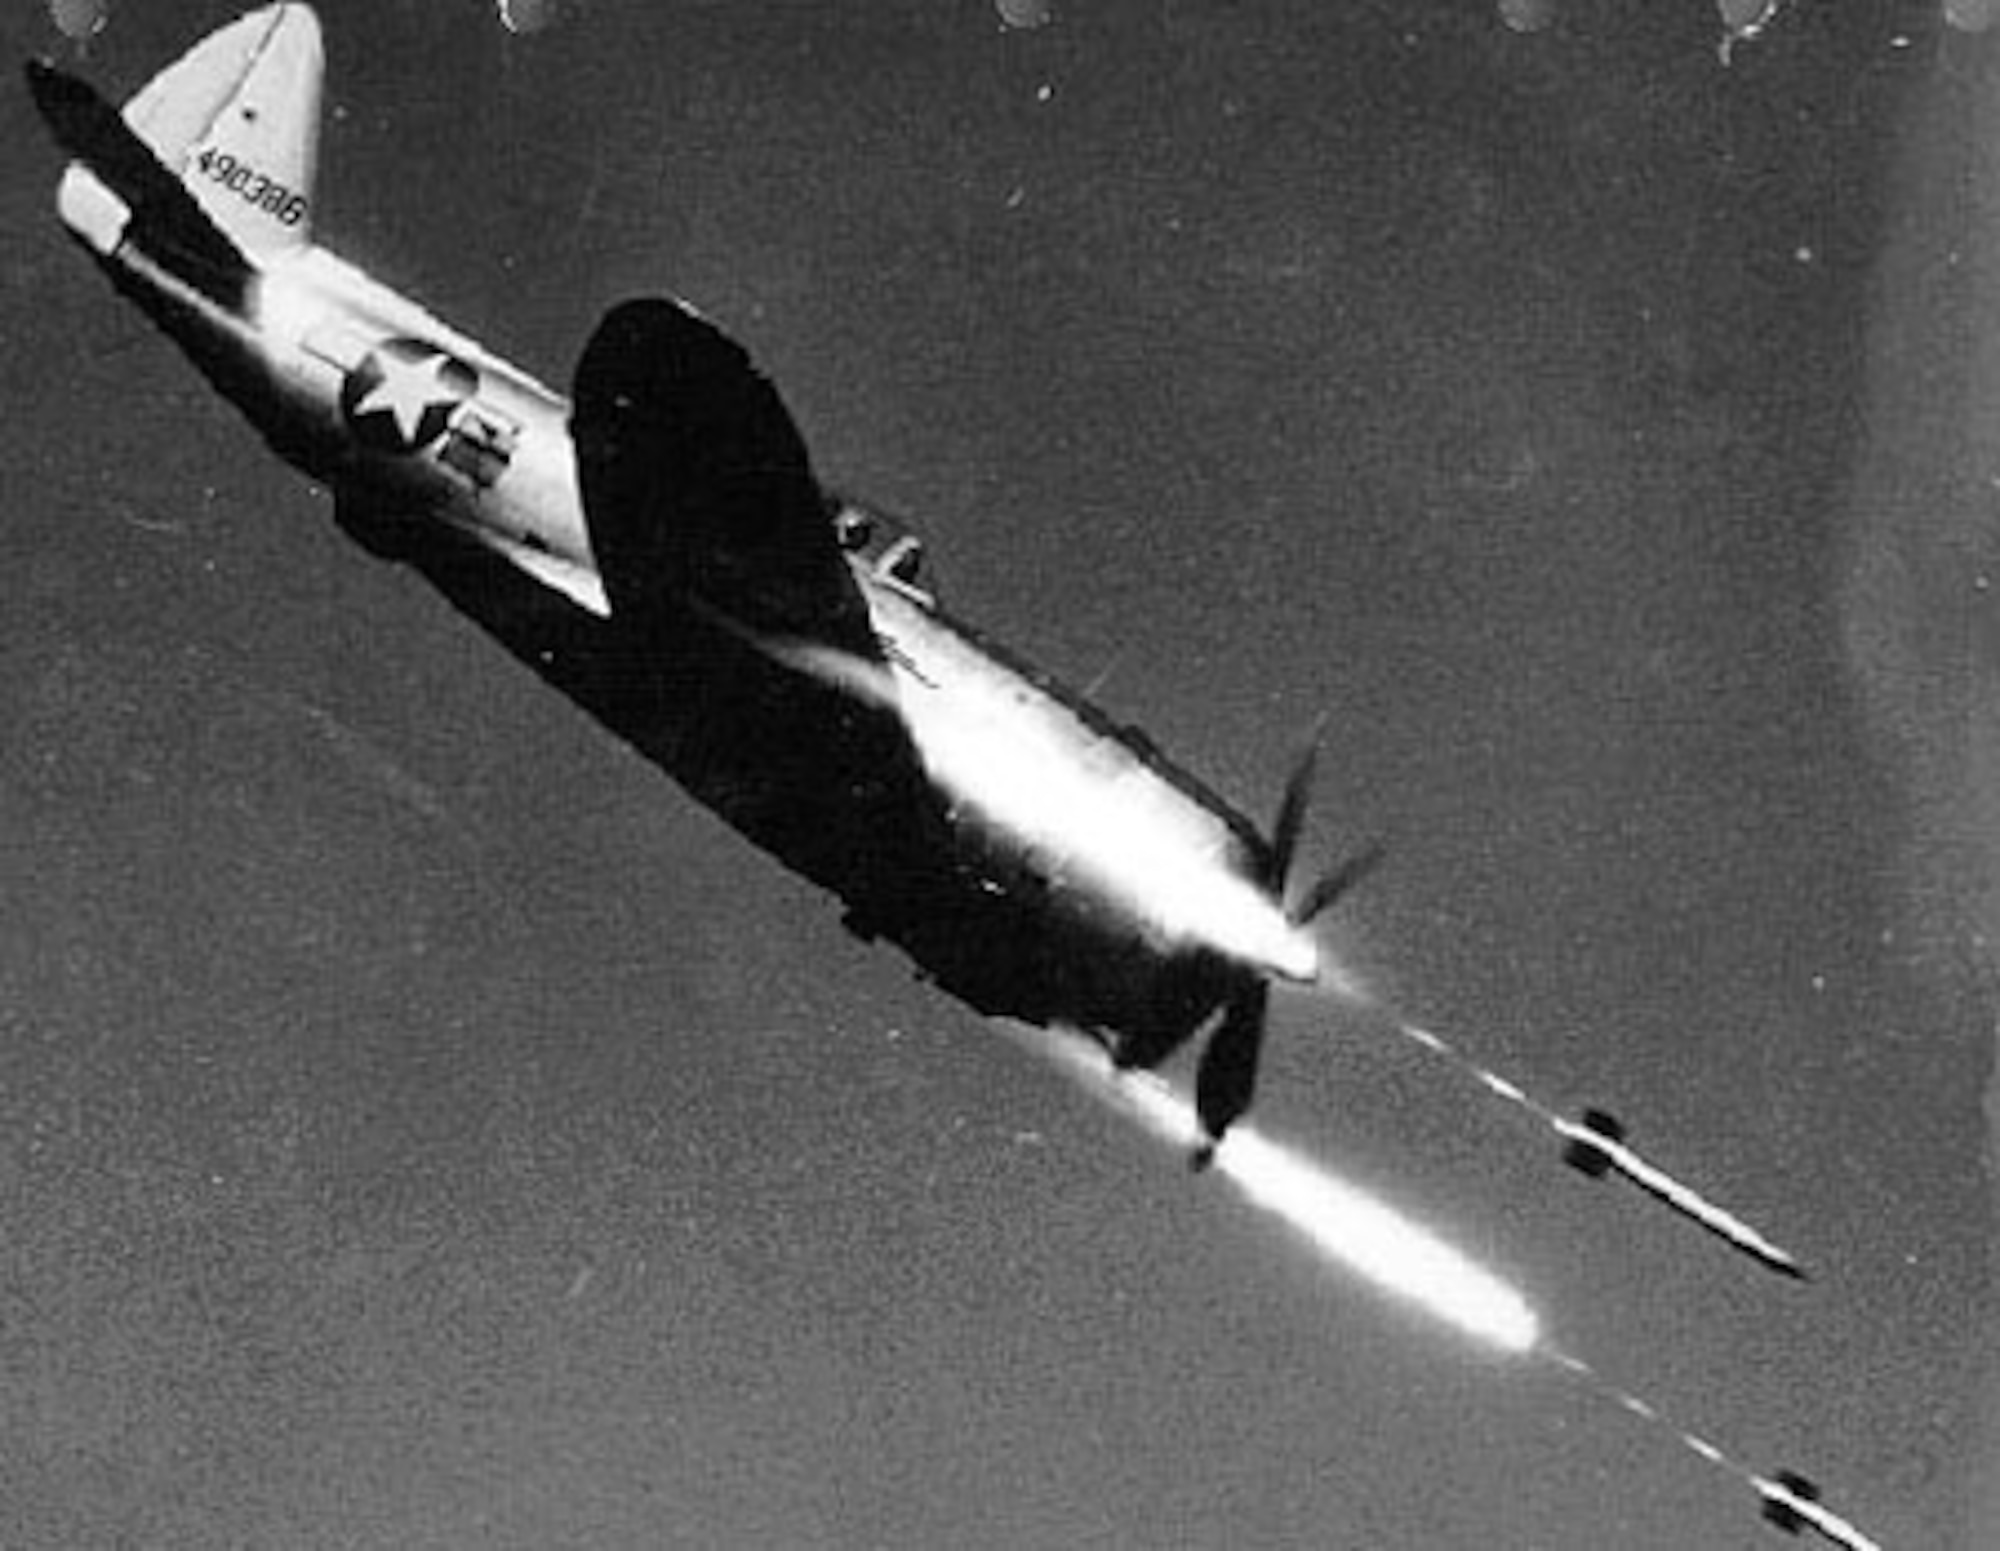 Republic P-47D-40-RE (S/N 44-90386) in flight firing rockets. (U.S. Air Force photo)